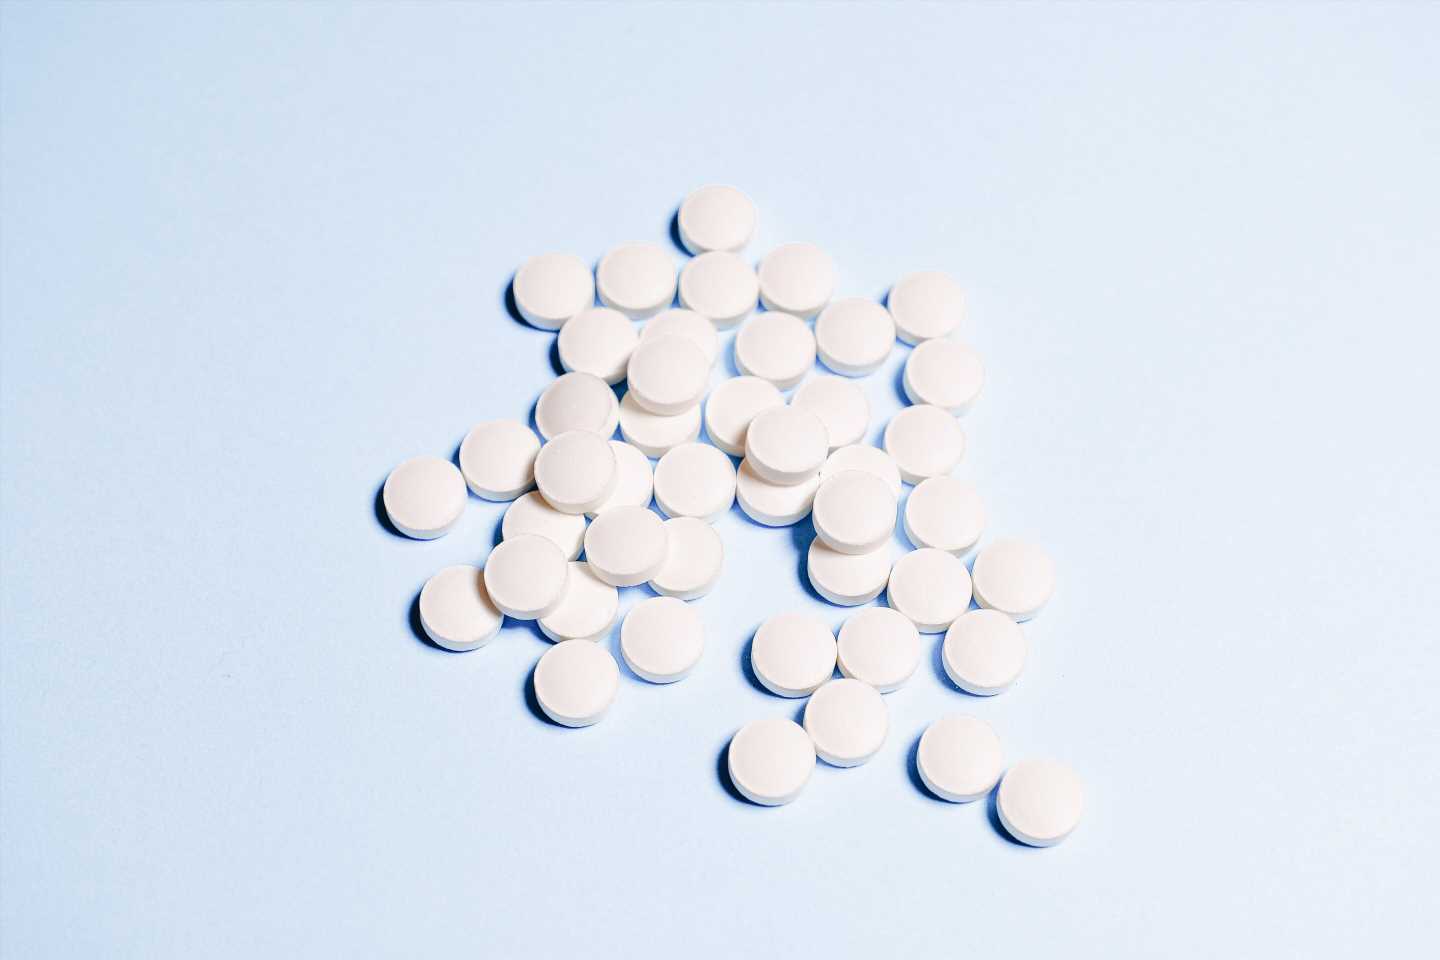 Aspirin may benefit cancer treatments